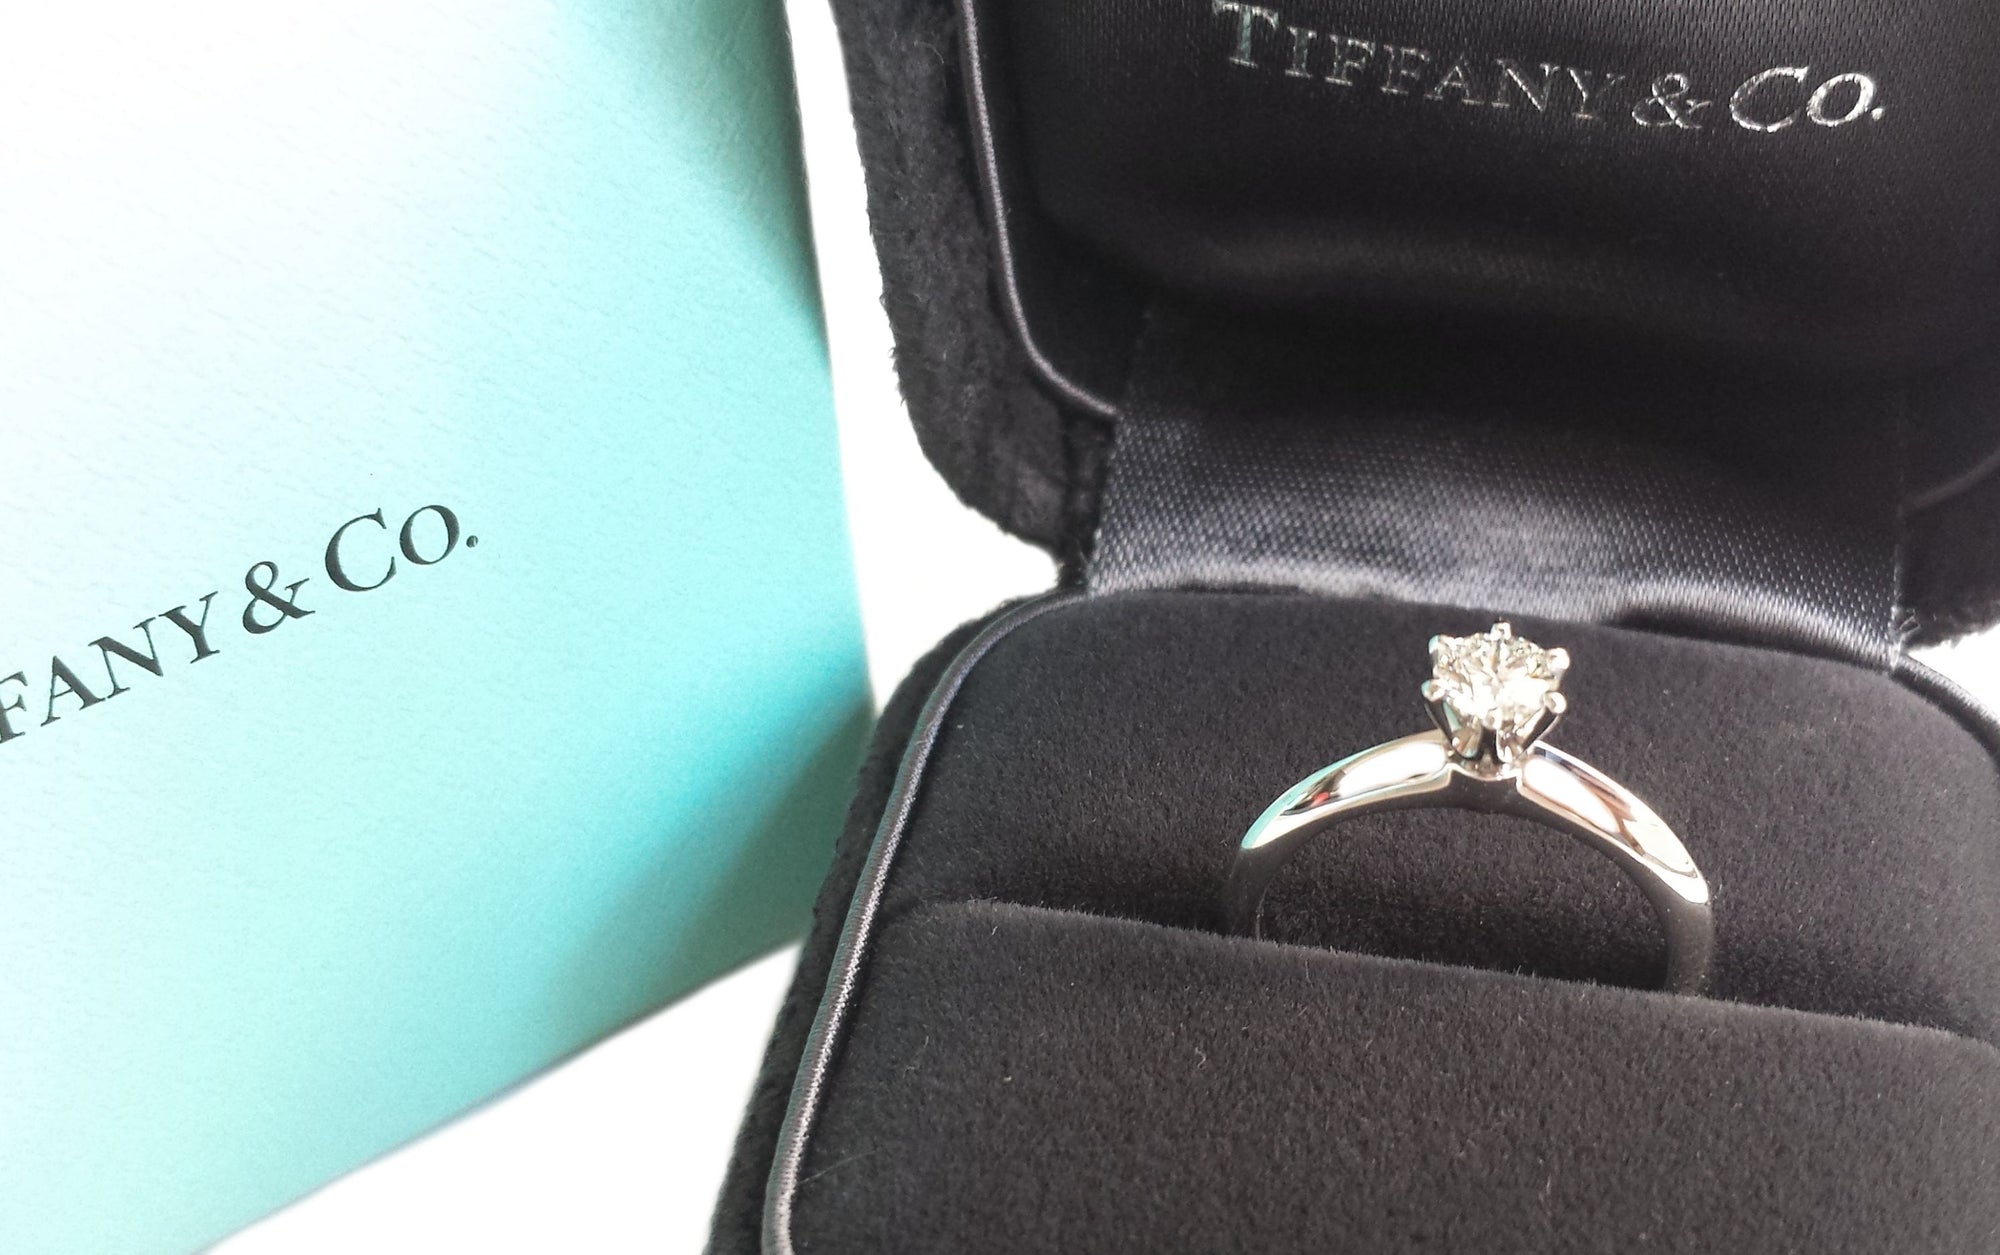 Tiffany & Co. 0.26ct I/VS1 Triple XXX Round Brilliant Cut Diamond Engagement Ring